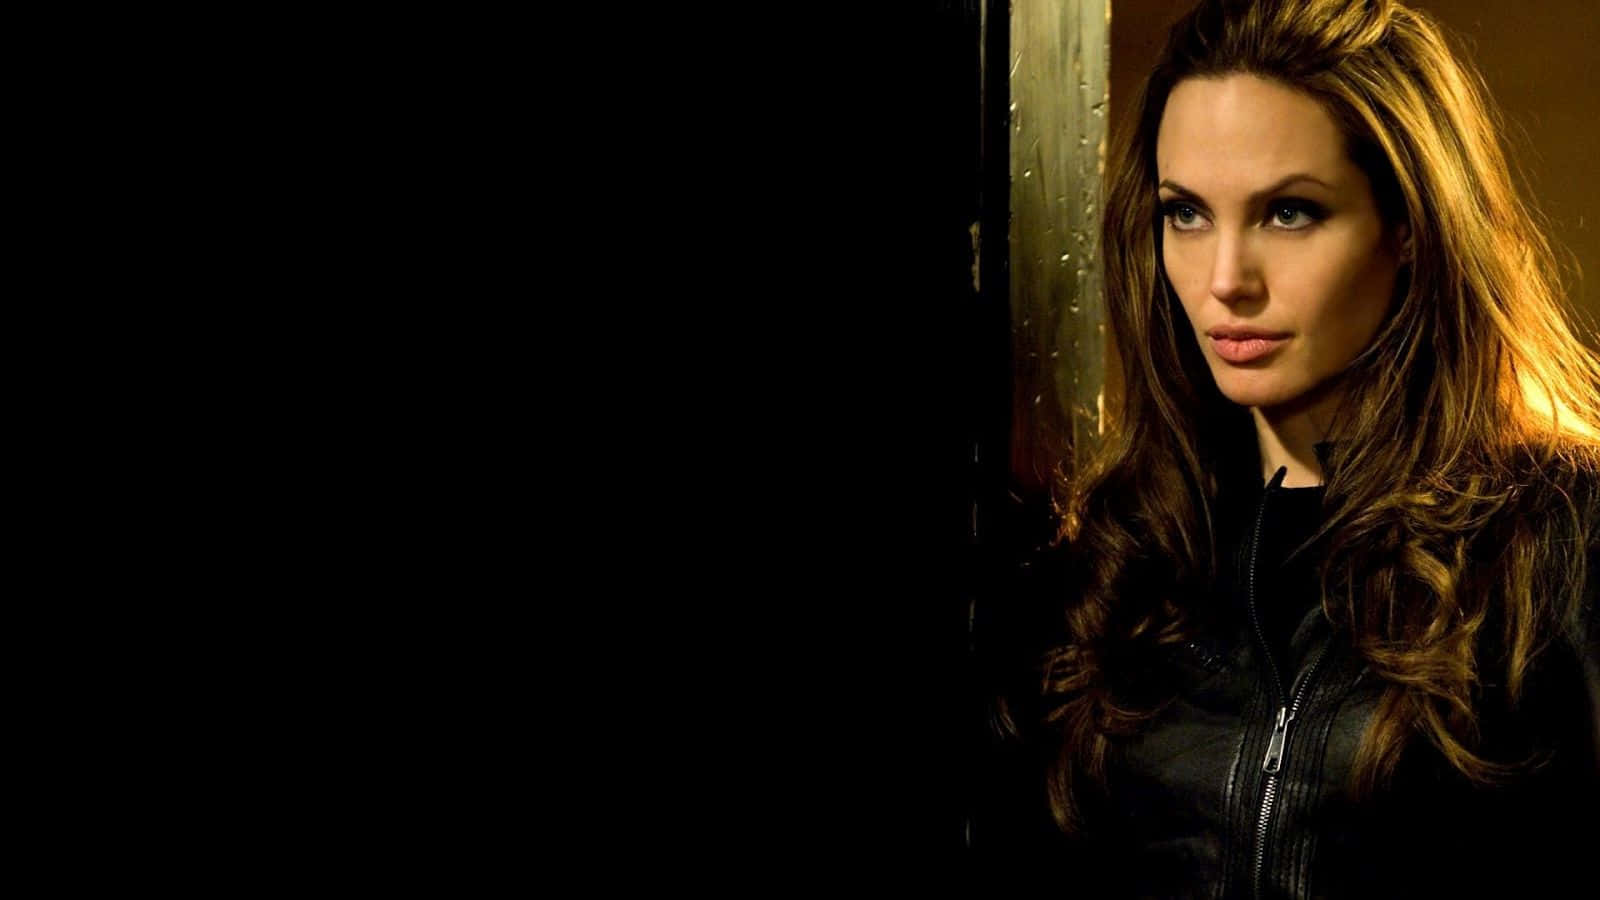 Hintergrundbildvon Angelina Jolie